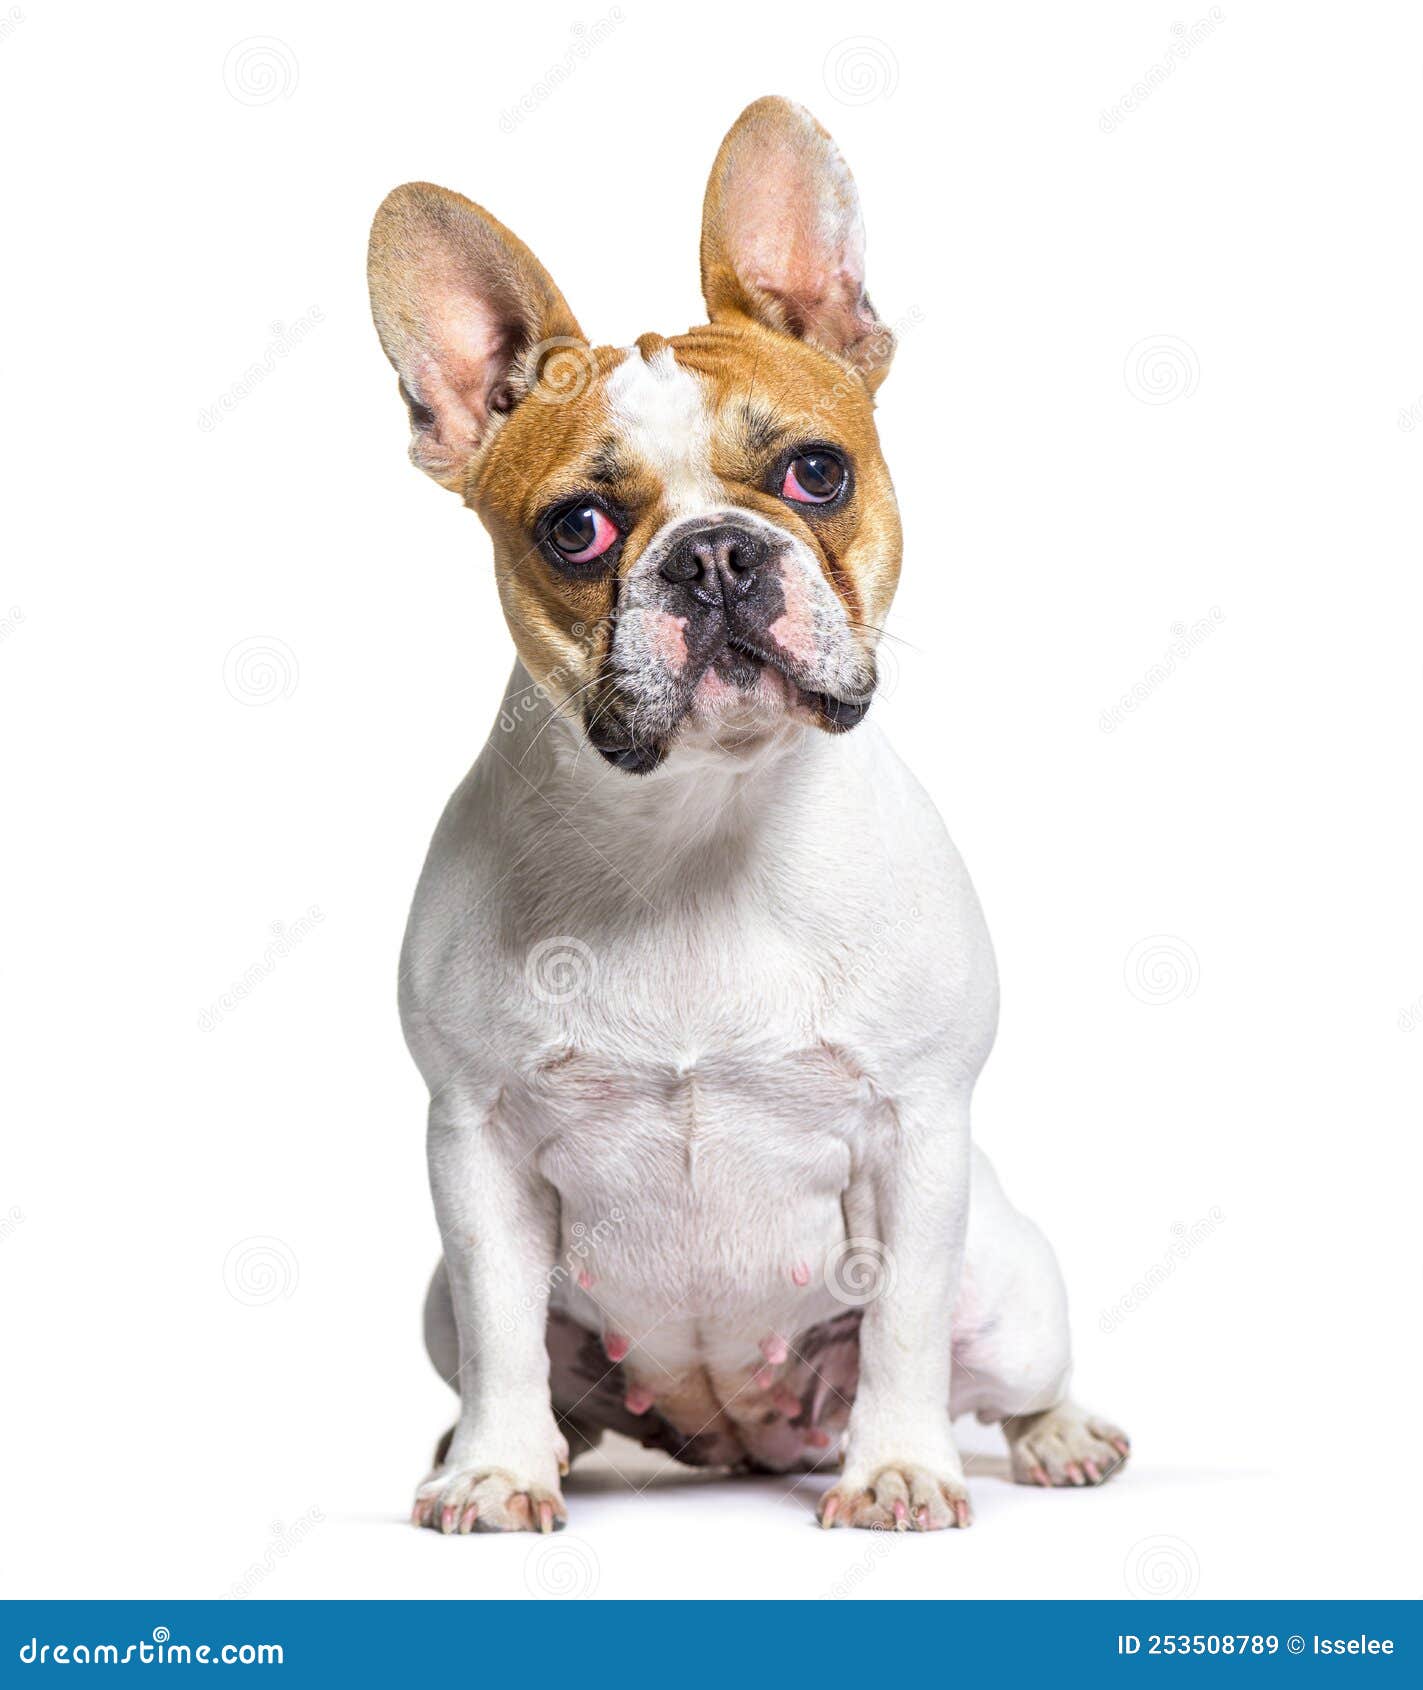 French Bulldog Looking at the Camera, Sitting Stock Image - Image of ...